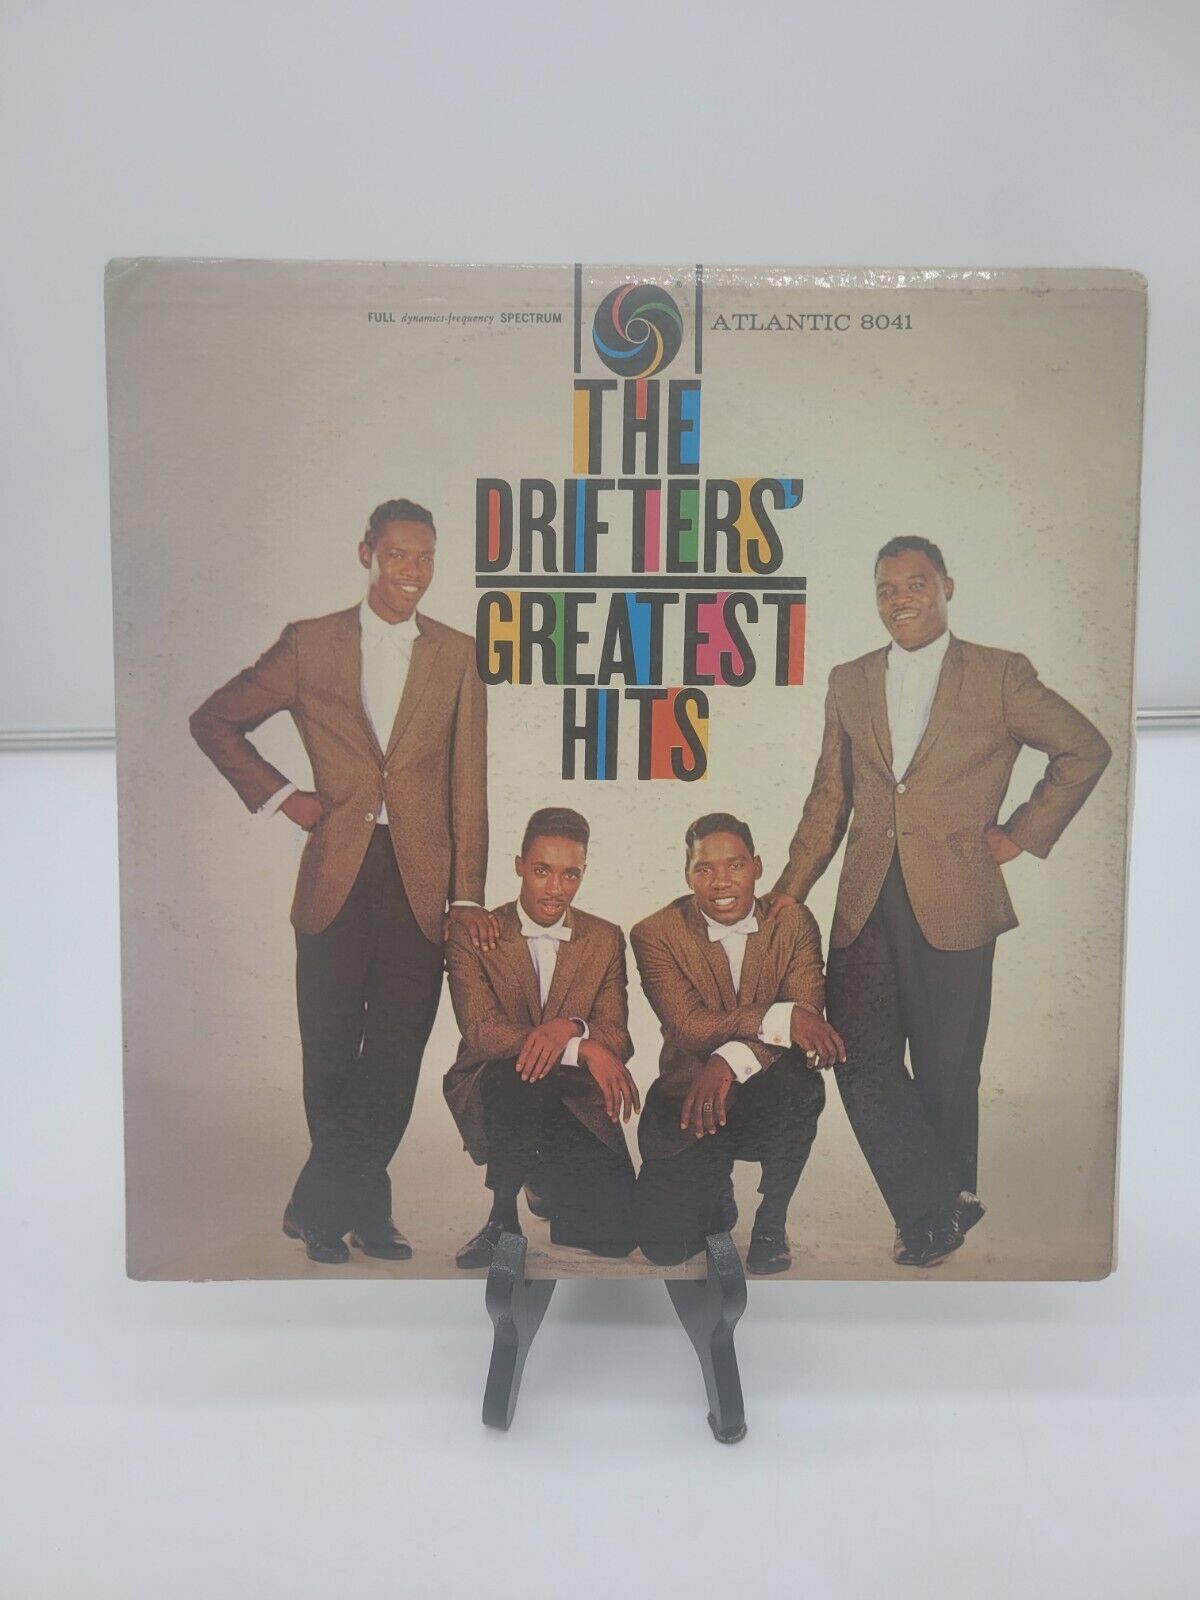 The Drifters-Greatest Hits-Atlantic 8041-MONO